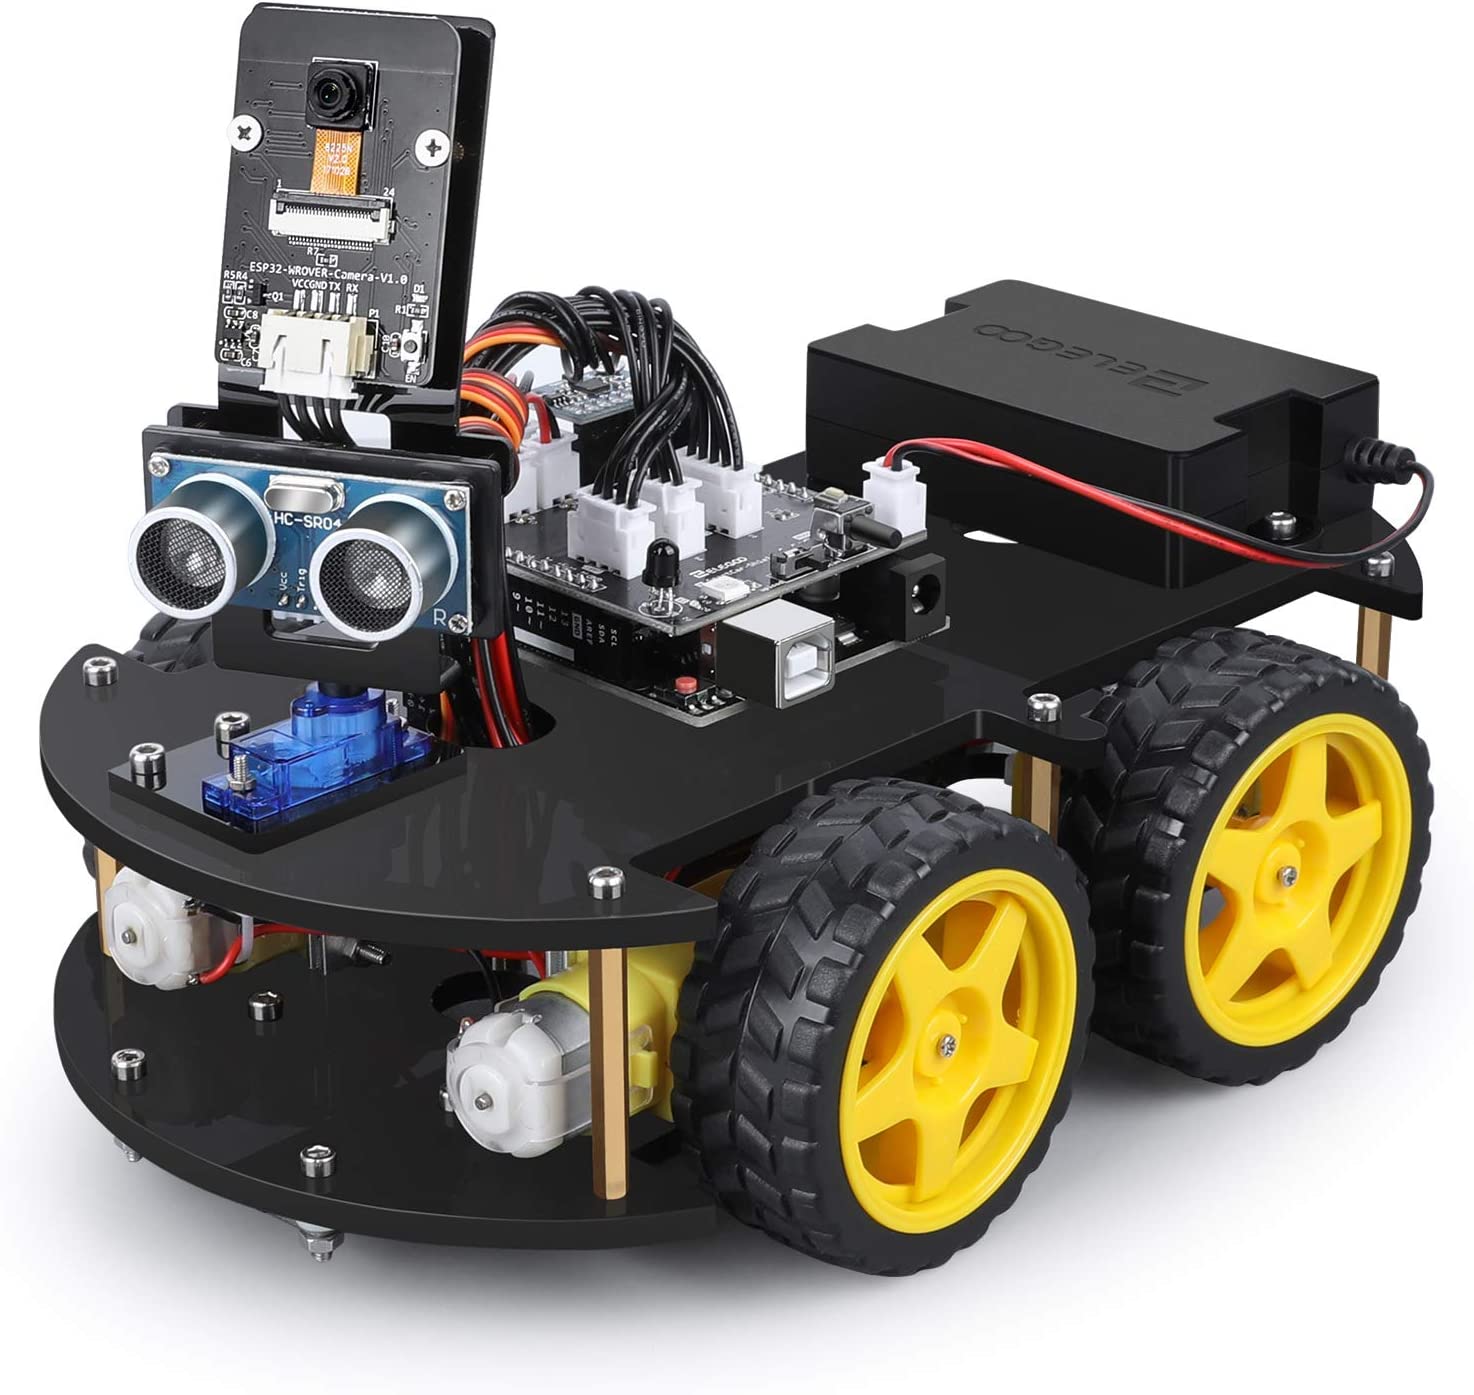 ELEGOO UNO R3 Project Smart Robot Car Kit V4 with UNO R3